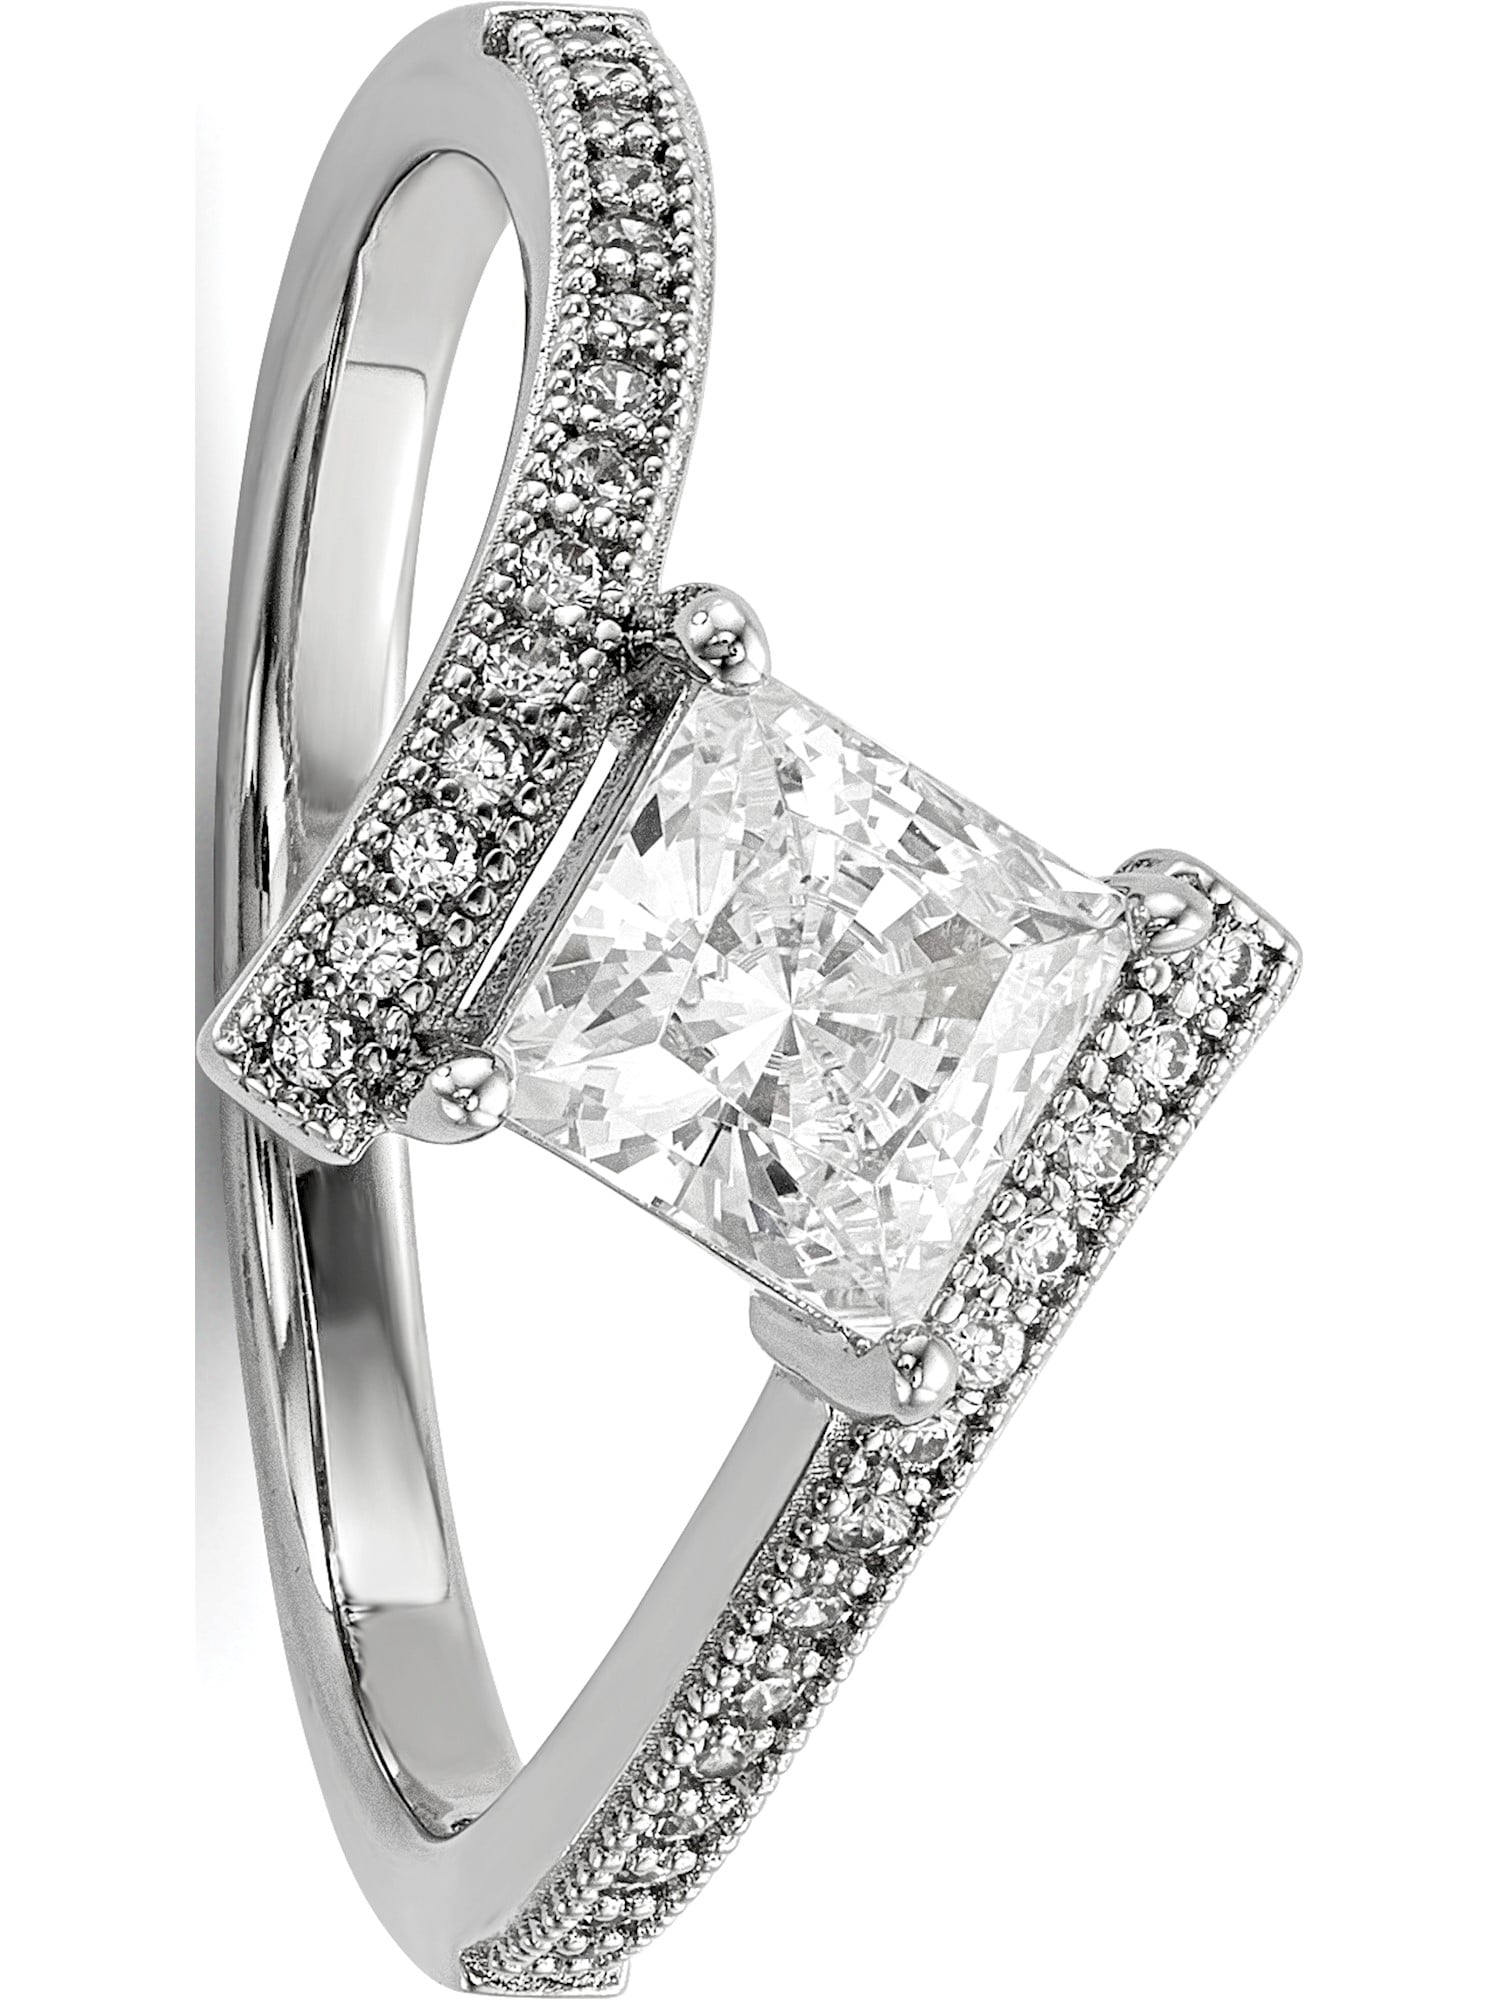 Gemini Groom & Bride Two Tone Rose Gold & Silver Brush & Polish Titanium Wedding Ring Set Width 7mm & 5mm Men Ring Size 10.5 Women Ring Size 5